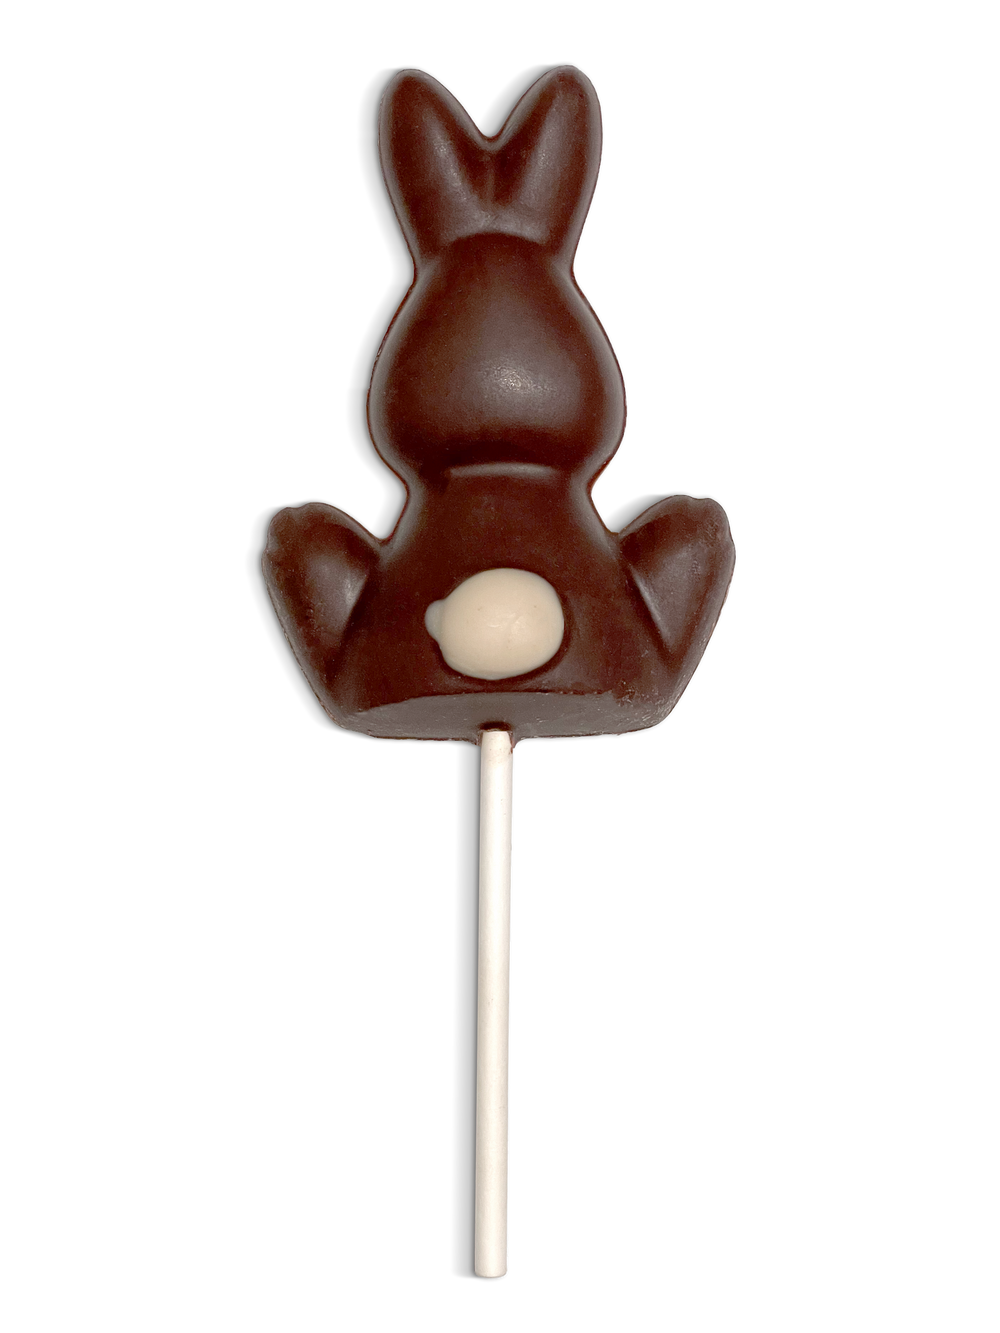 HAPPi Bunny Butt Chocolate Lollies